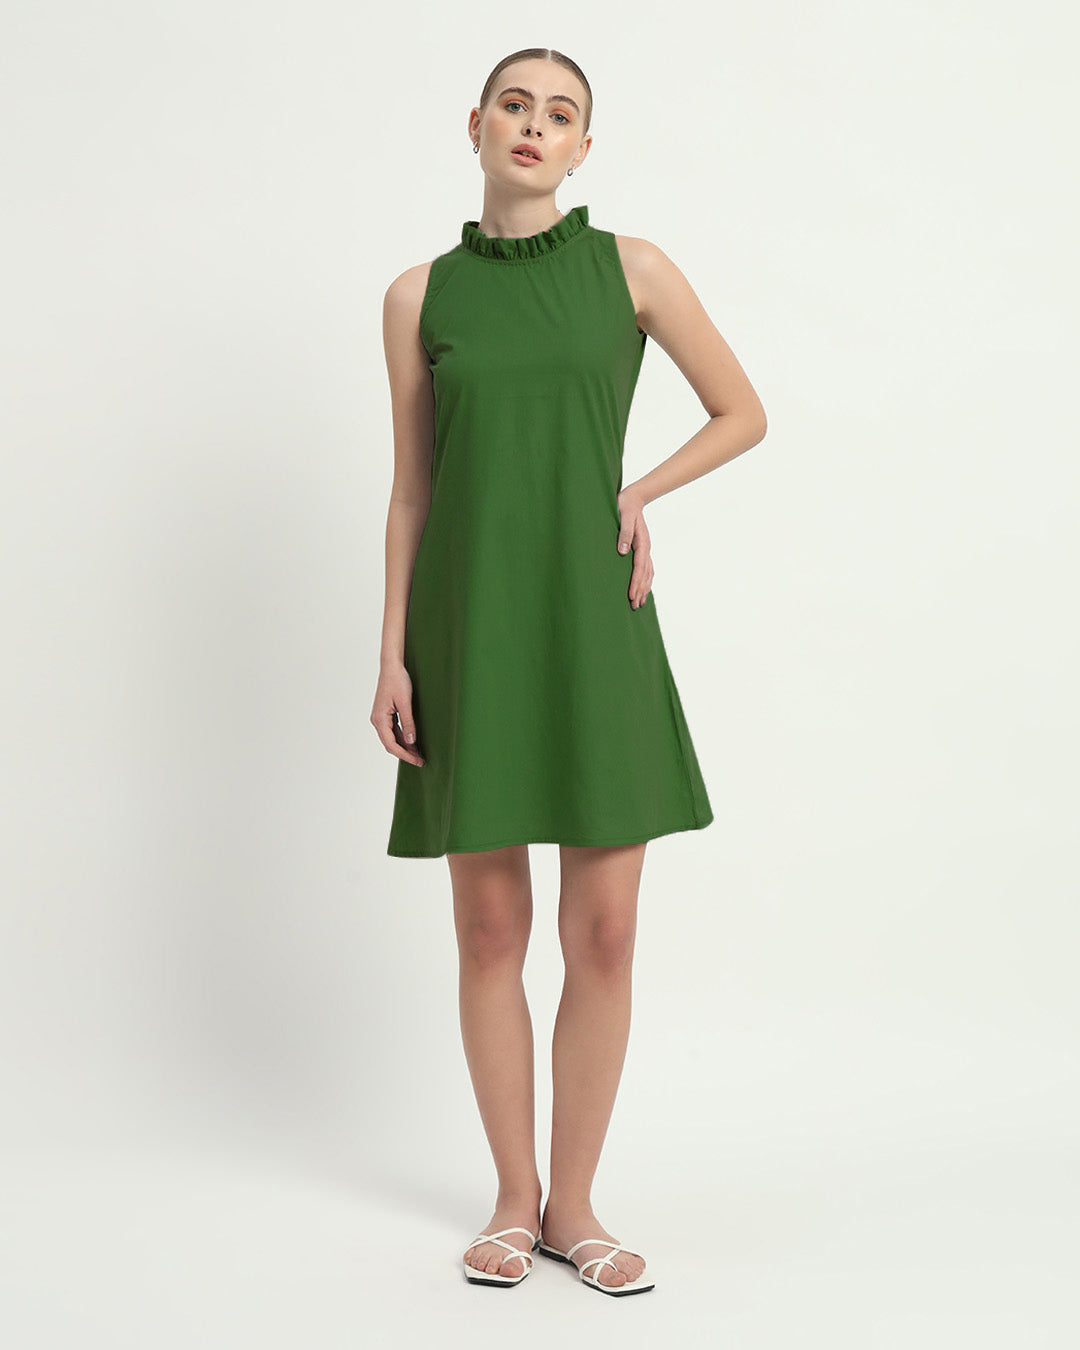 The Emerald Angelica Cotton Dress